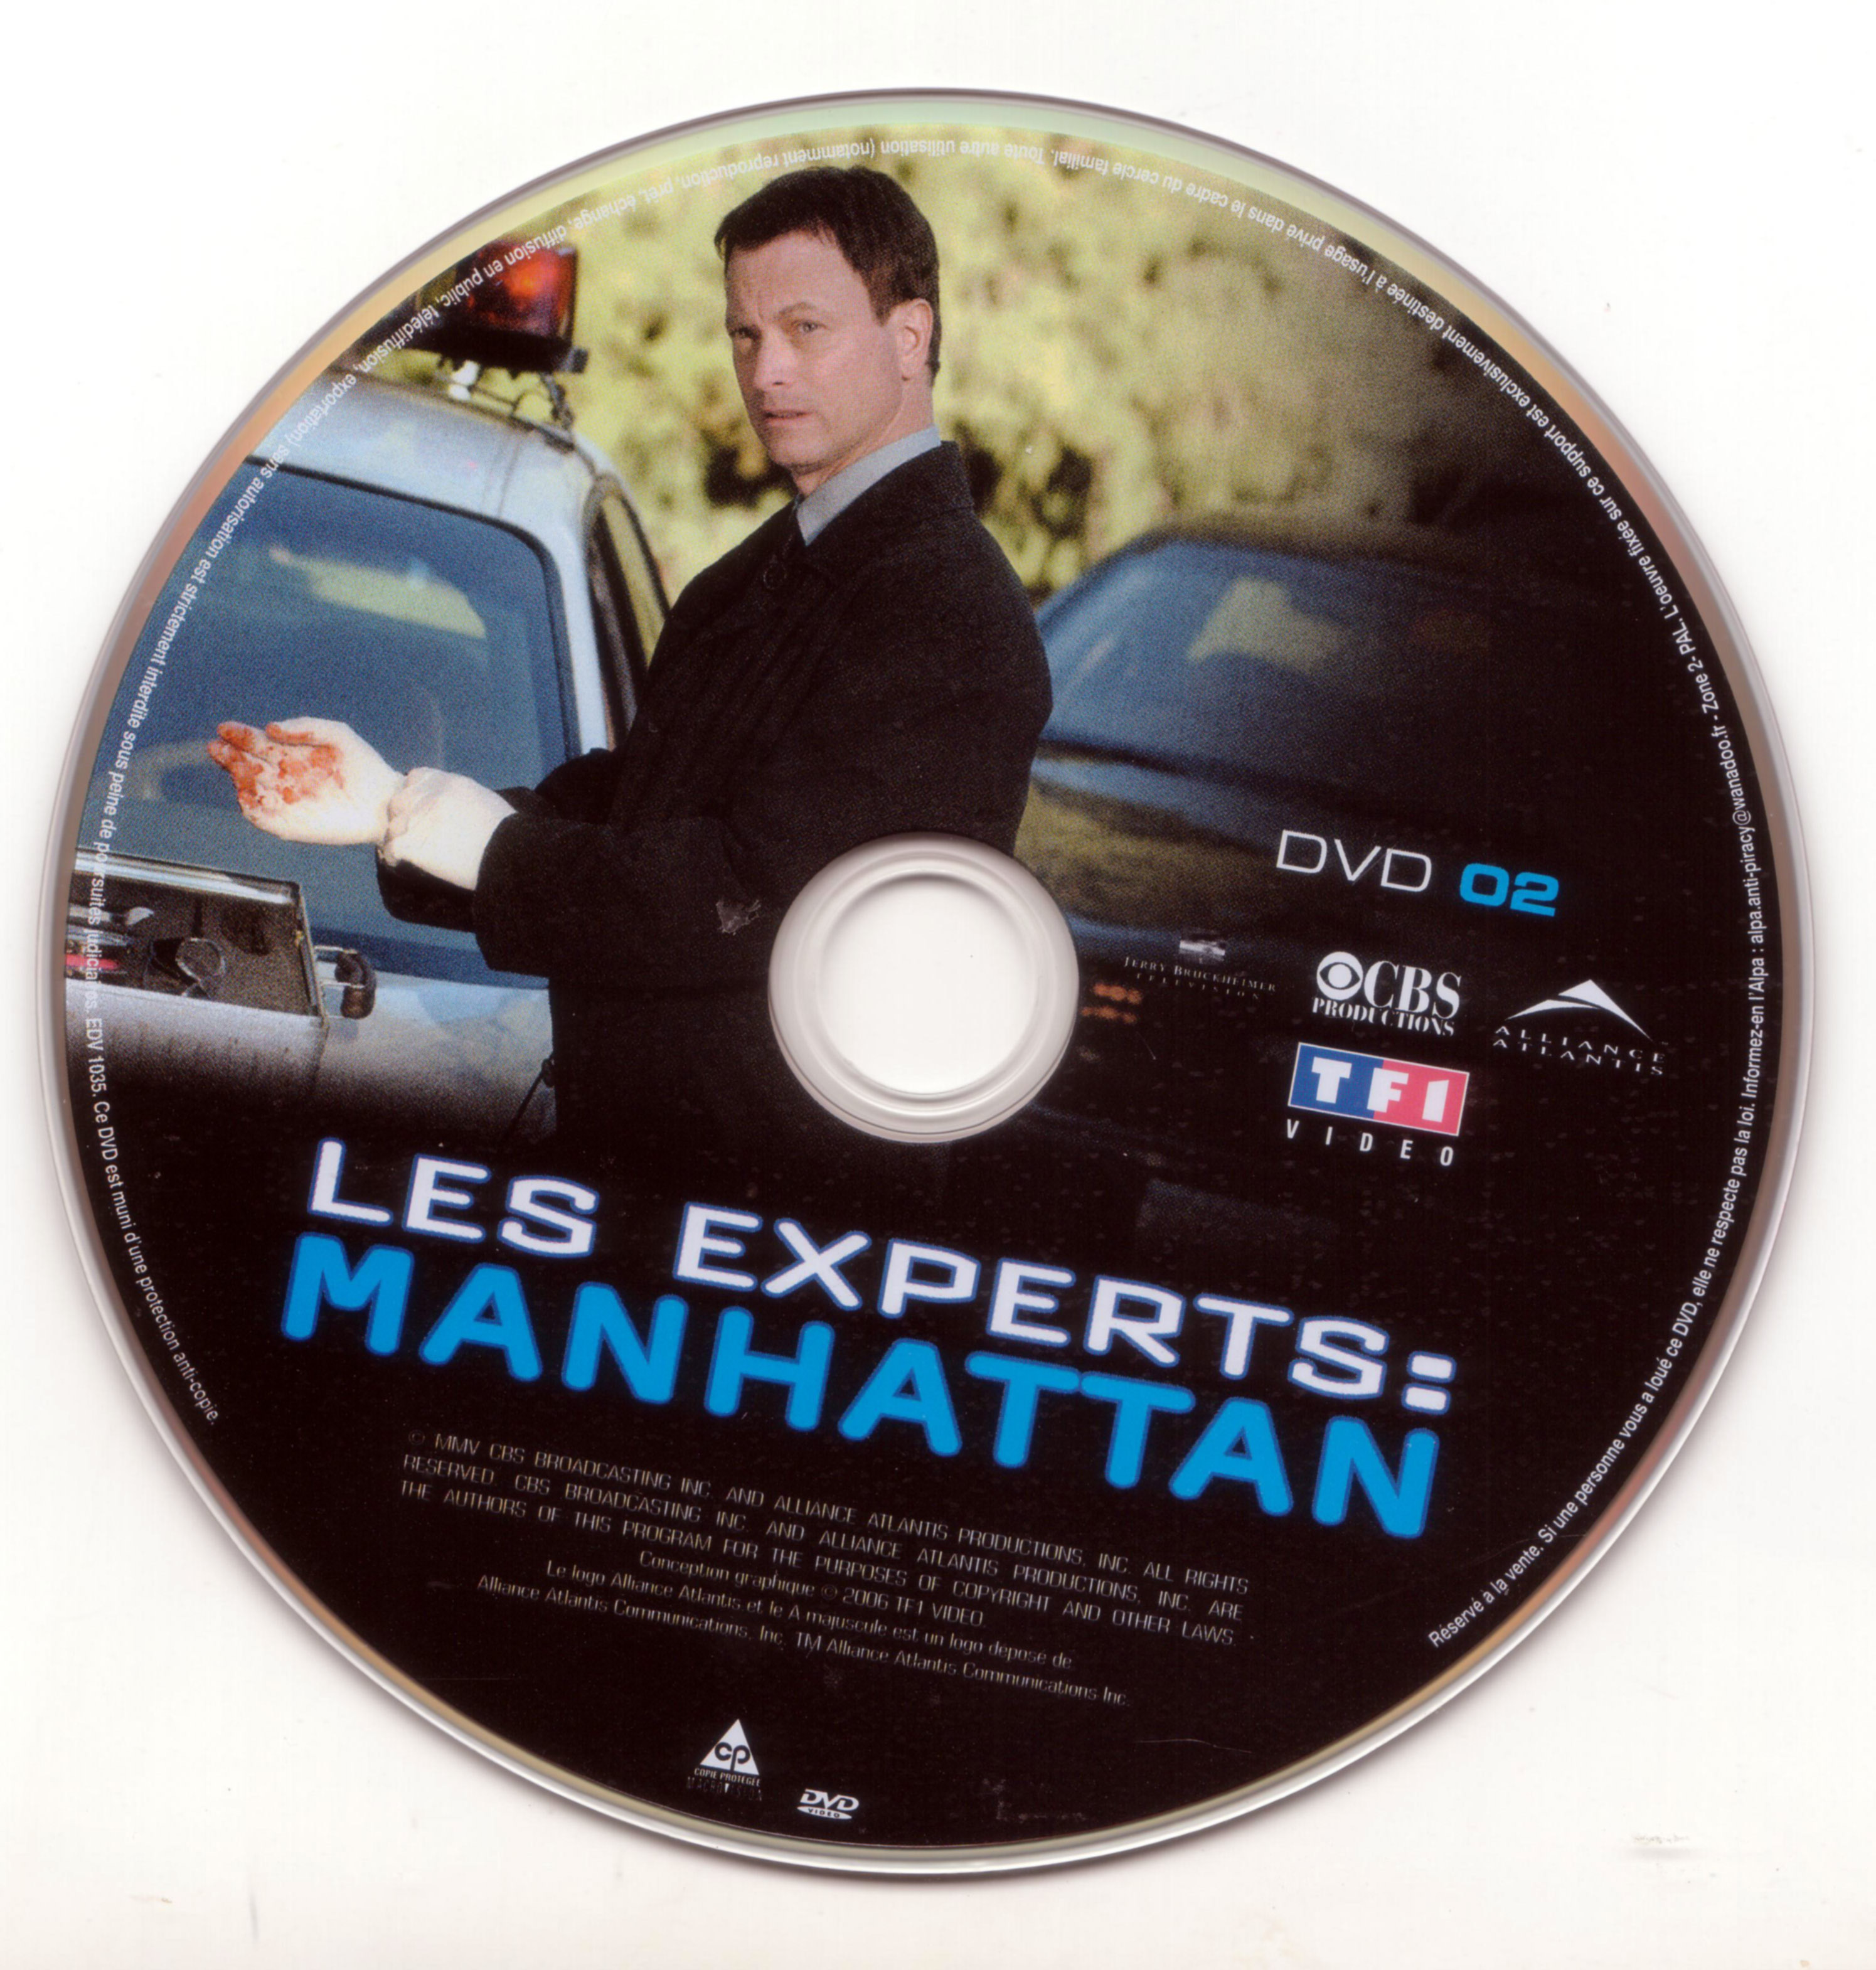 Les experts manhattan Saison 1 vol 2 DISC 2